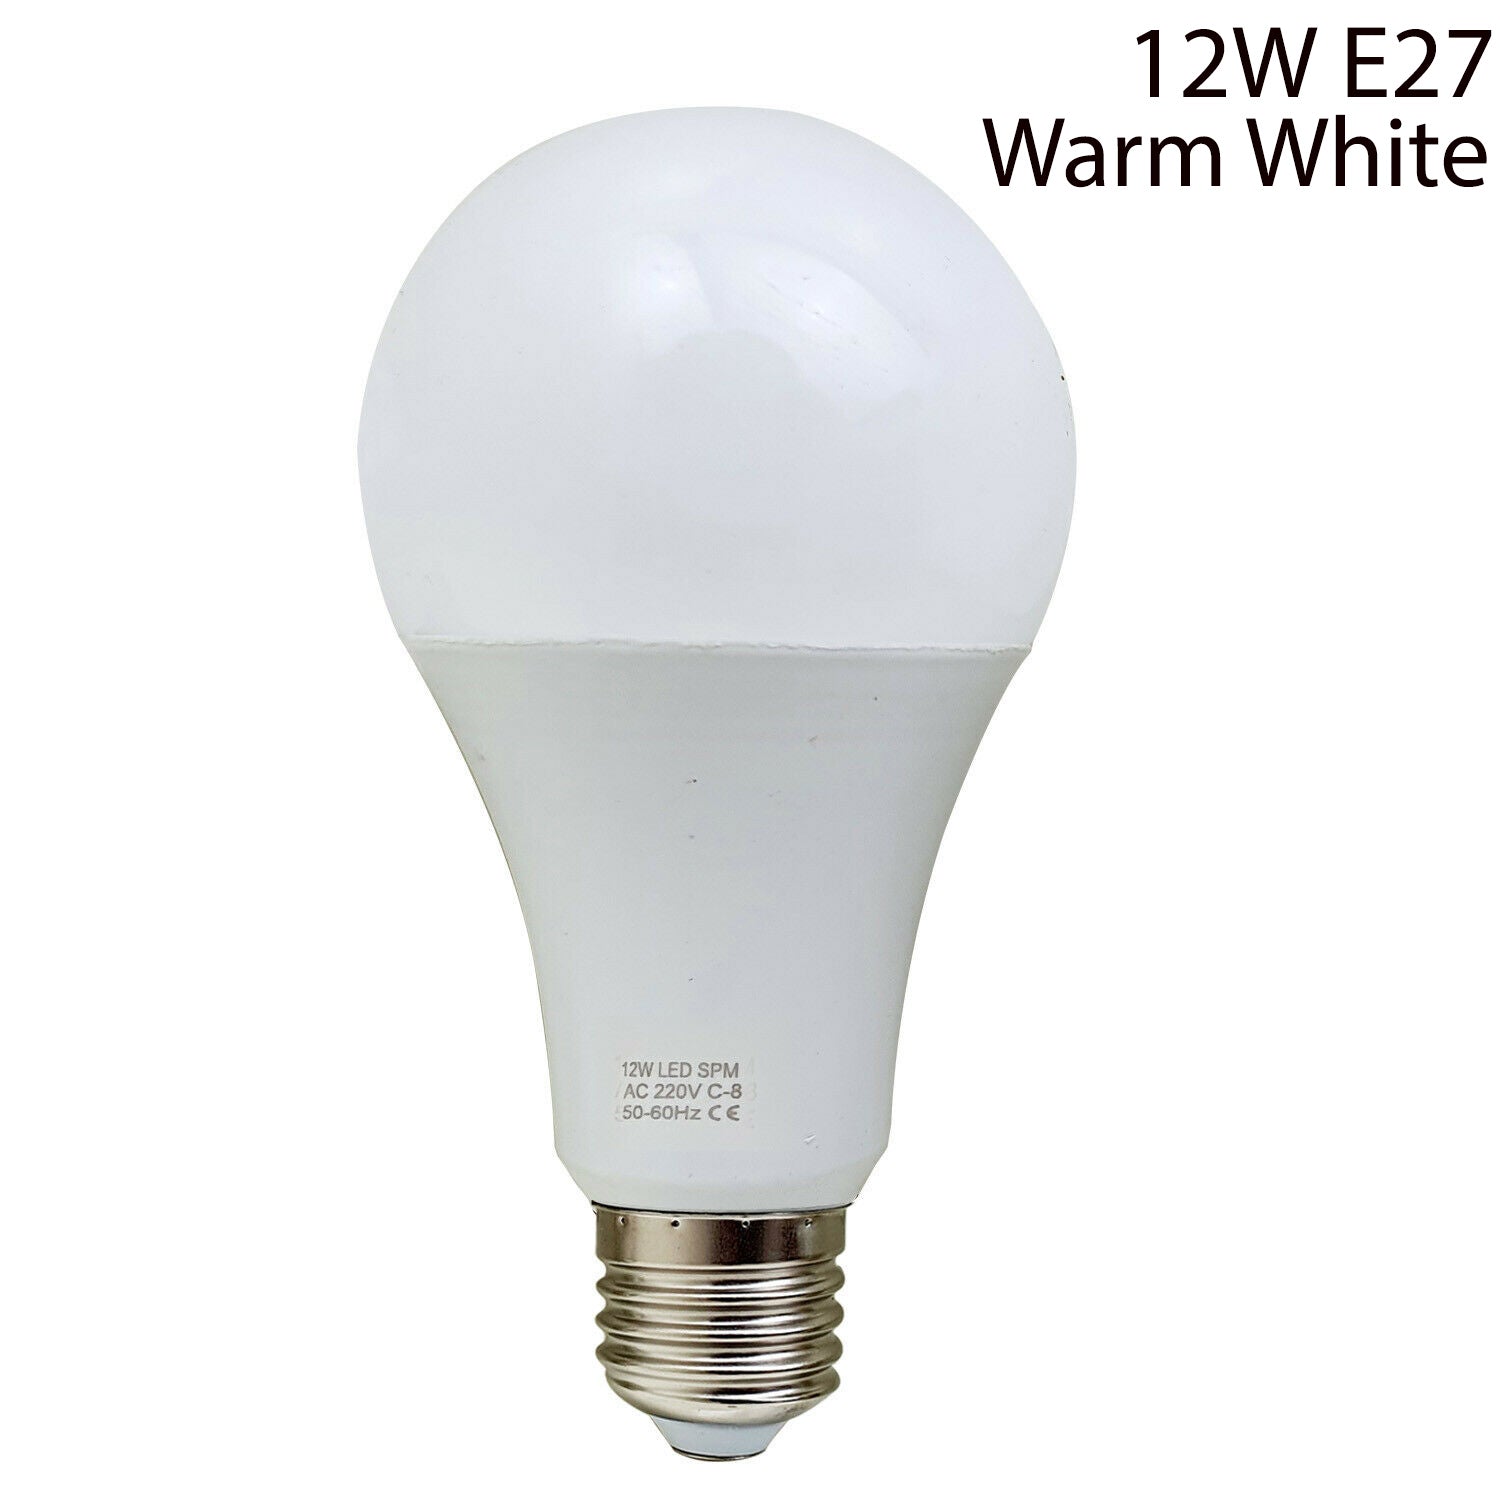 12W E27 Light Bulb Energy Saving Lamp Warm White Globe~1375 - LEDSone UK Ltd